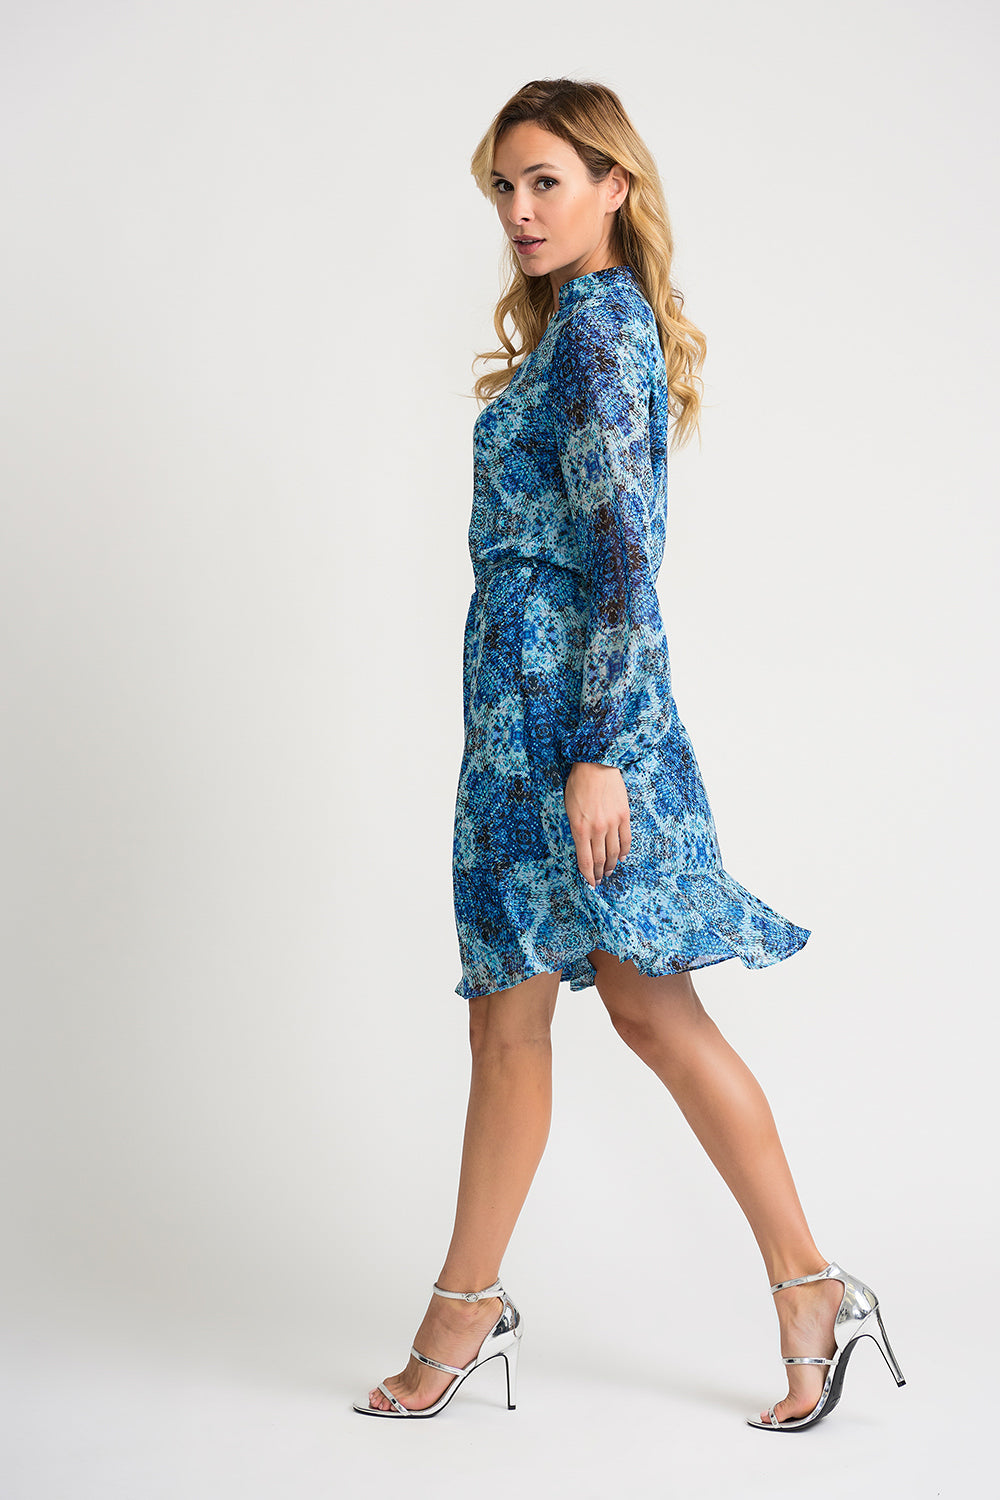 Joseph Ribkoff Blue-Multi Dress Style 202118